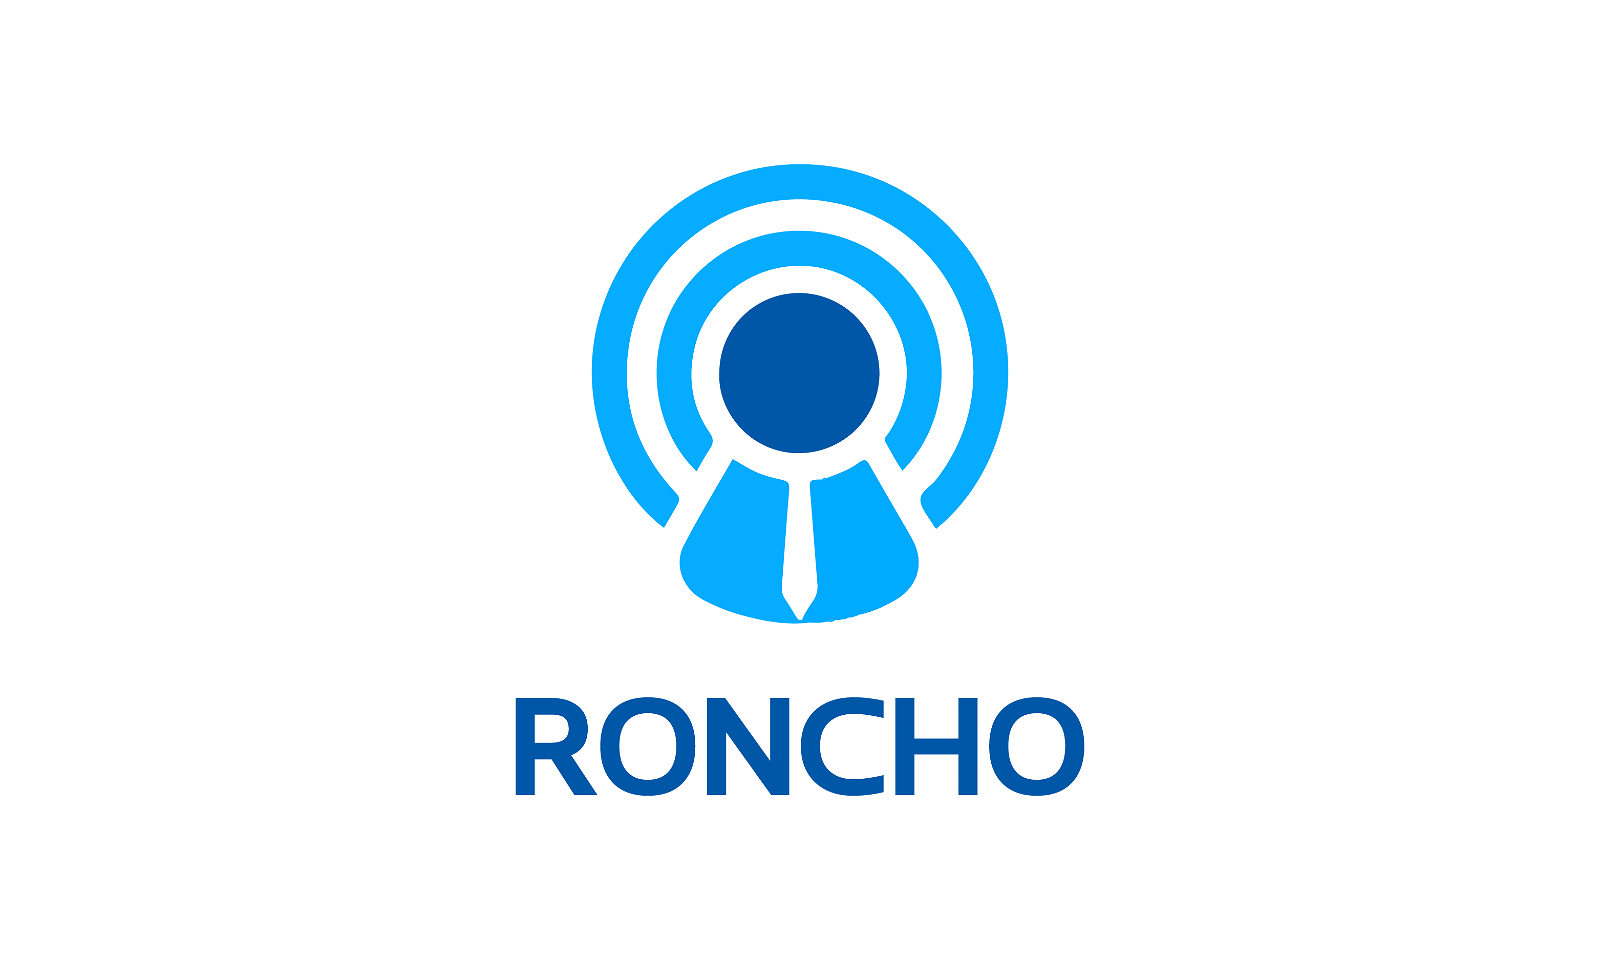 Roncho.com - Creative brandable domain for sale